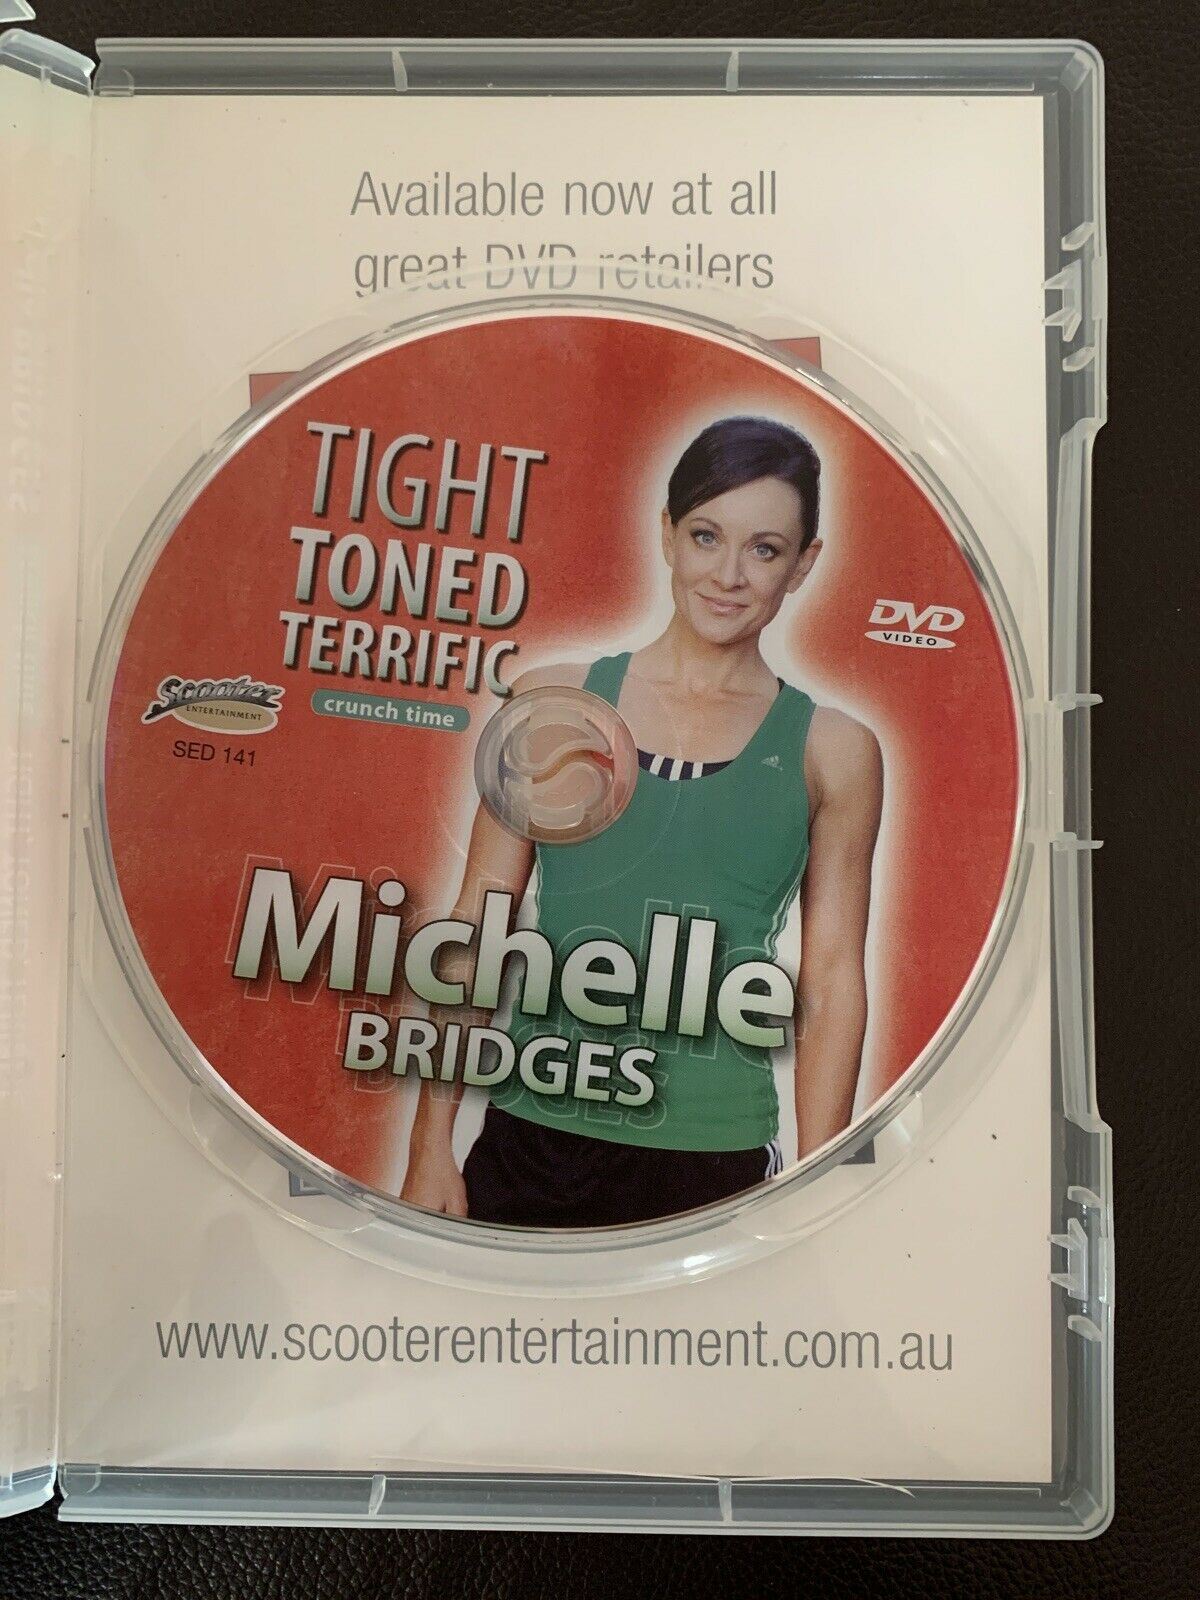 Michelle Bridges Crunch Time - Tight Toned Terrific DVD Region 4